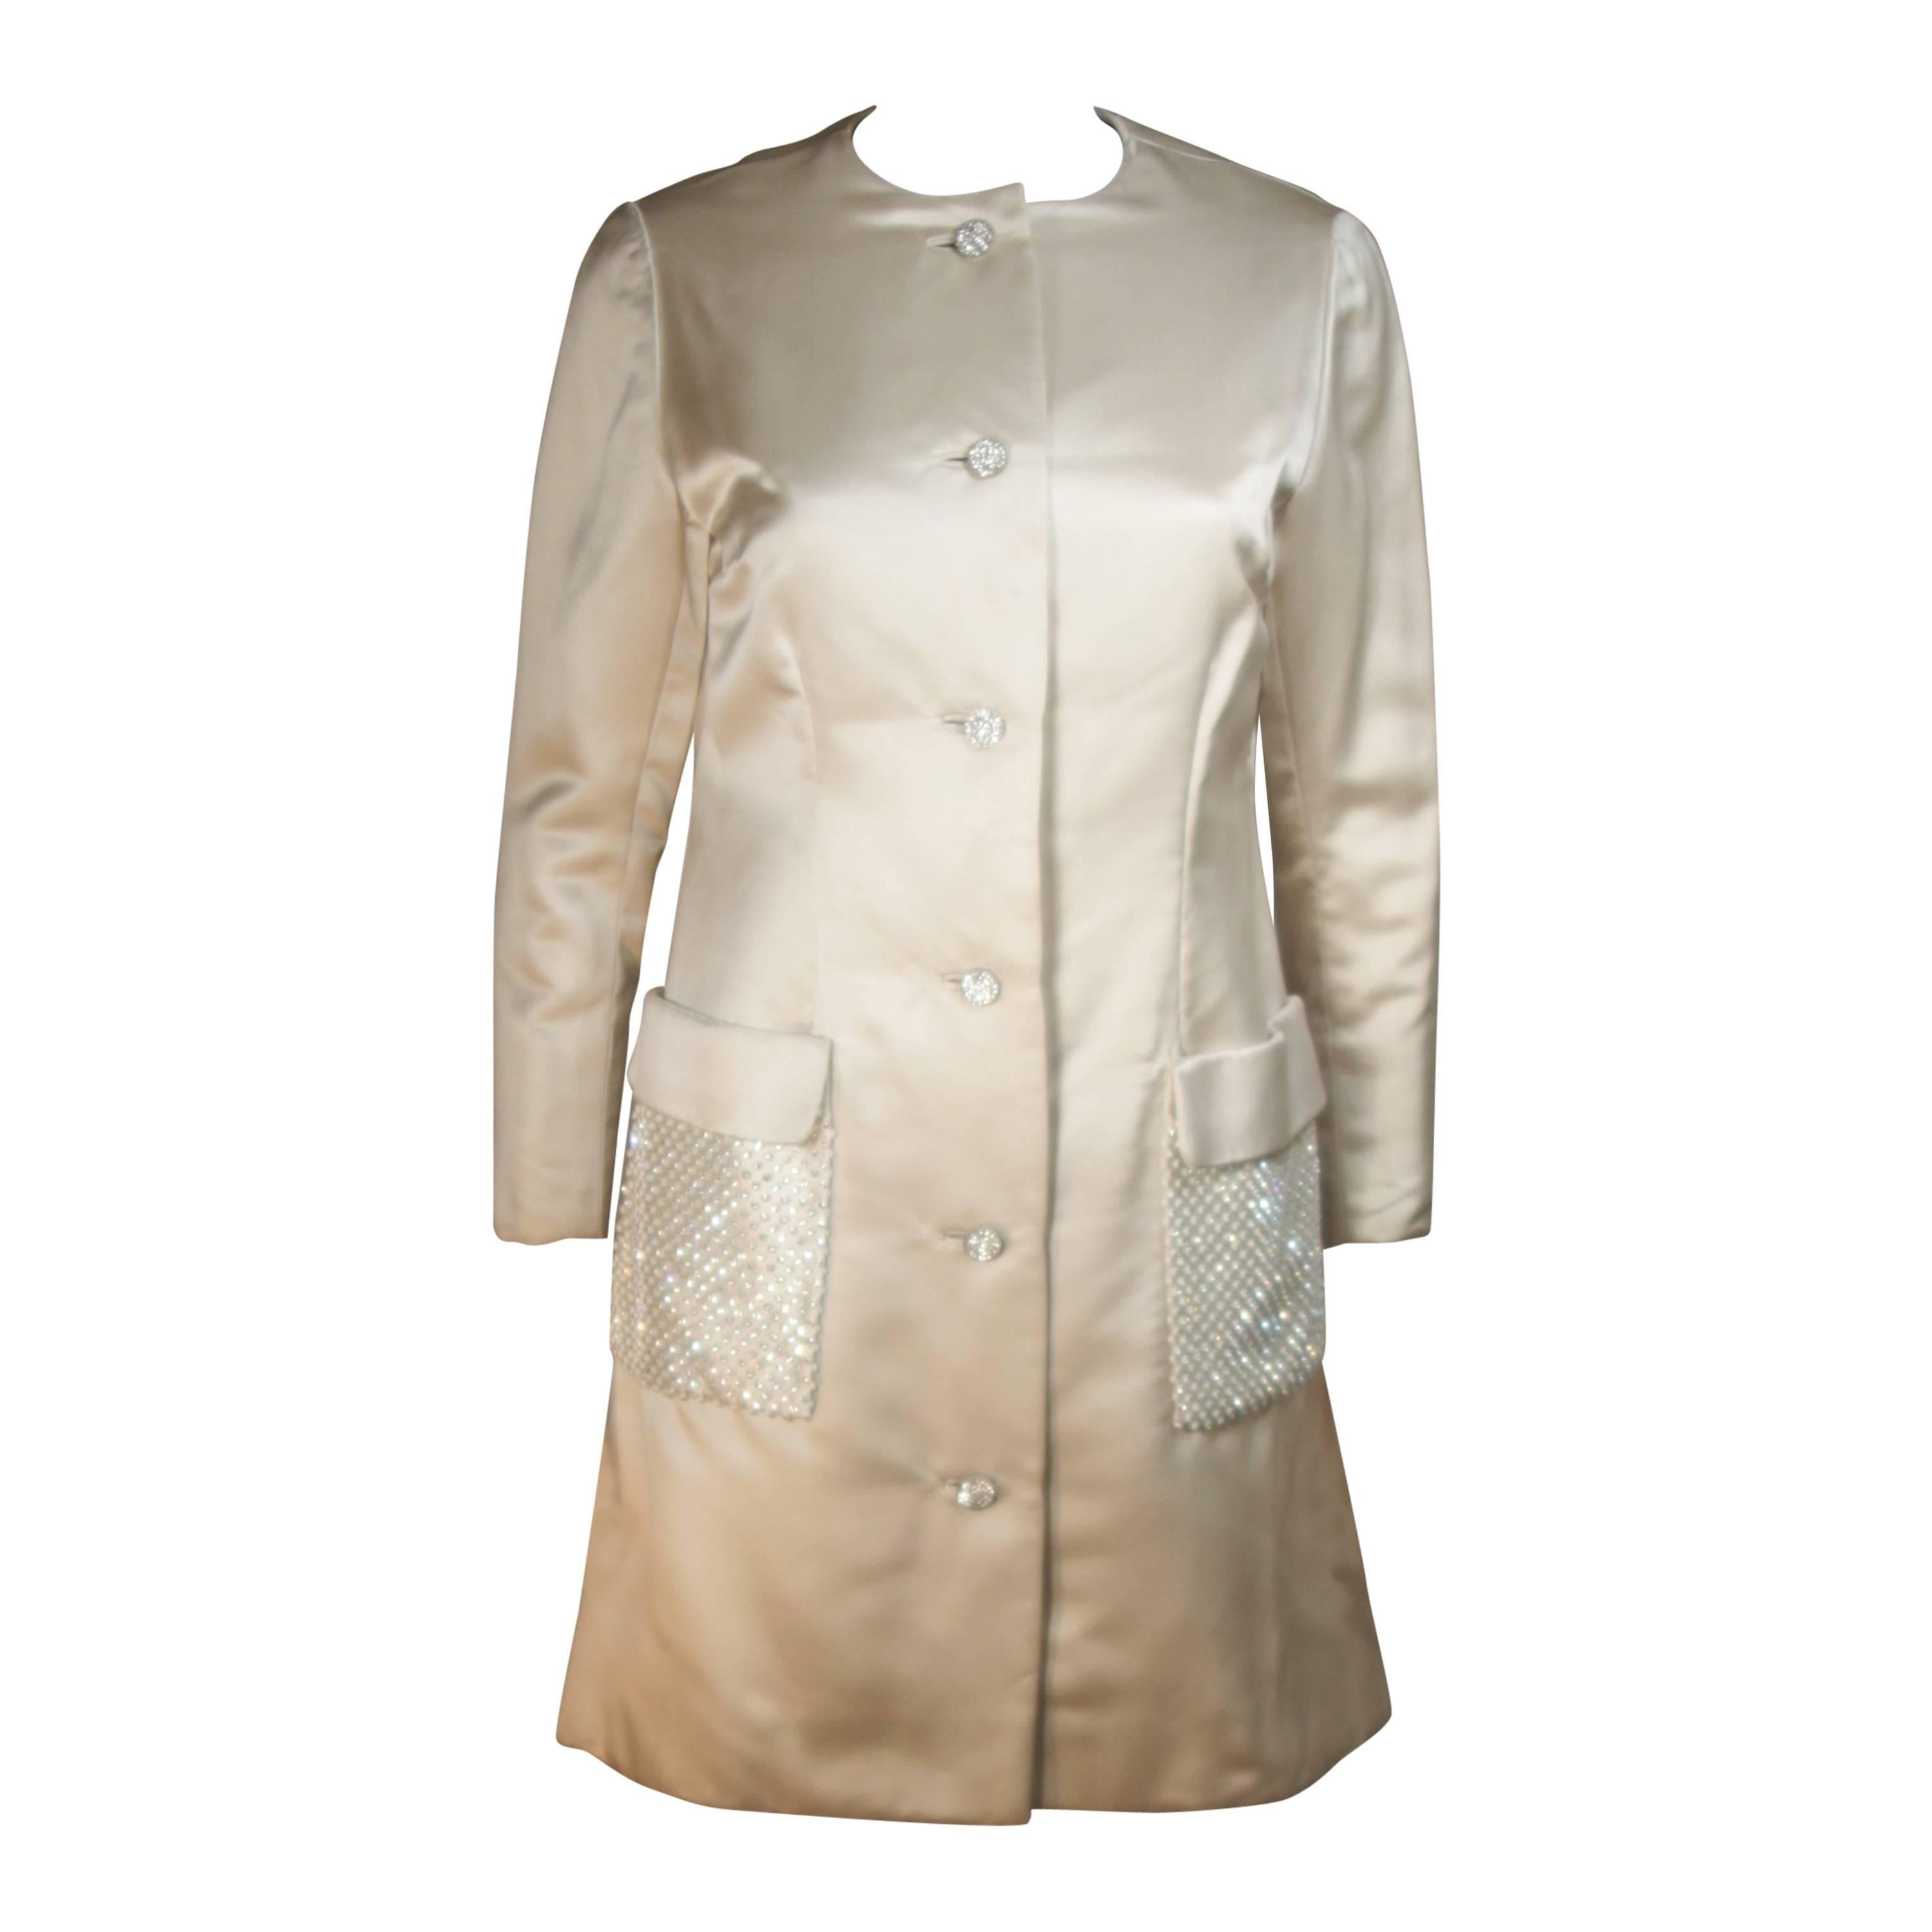 SHEDLOCK Ivory Silk Dress with Rhinestone Pocket Details Size Small Medium